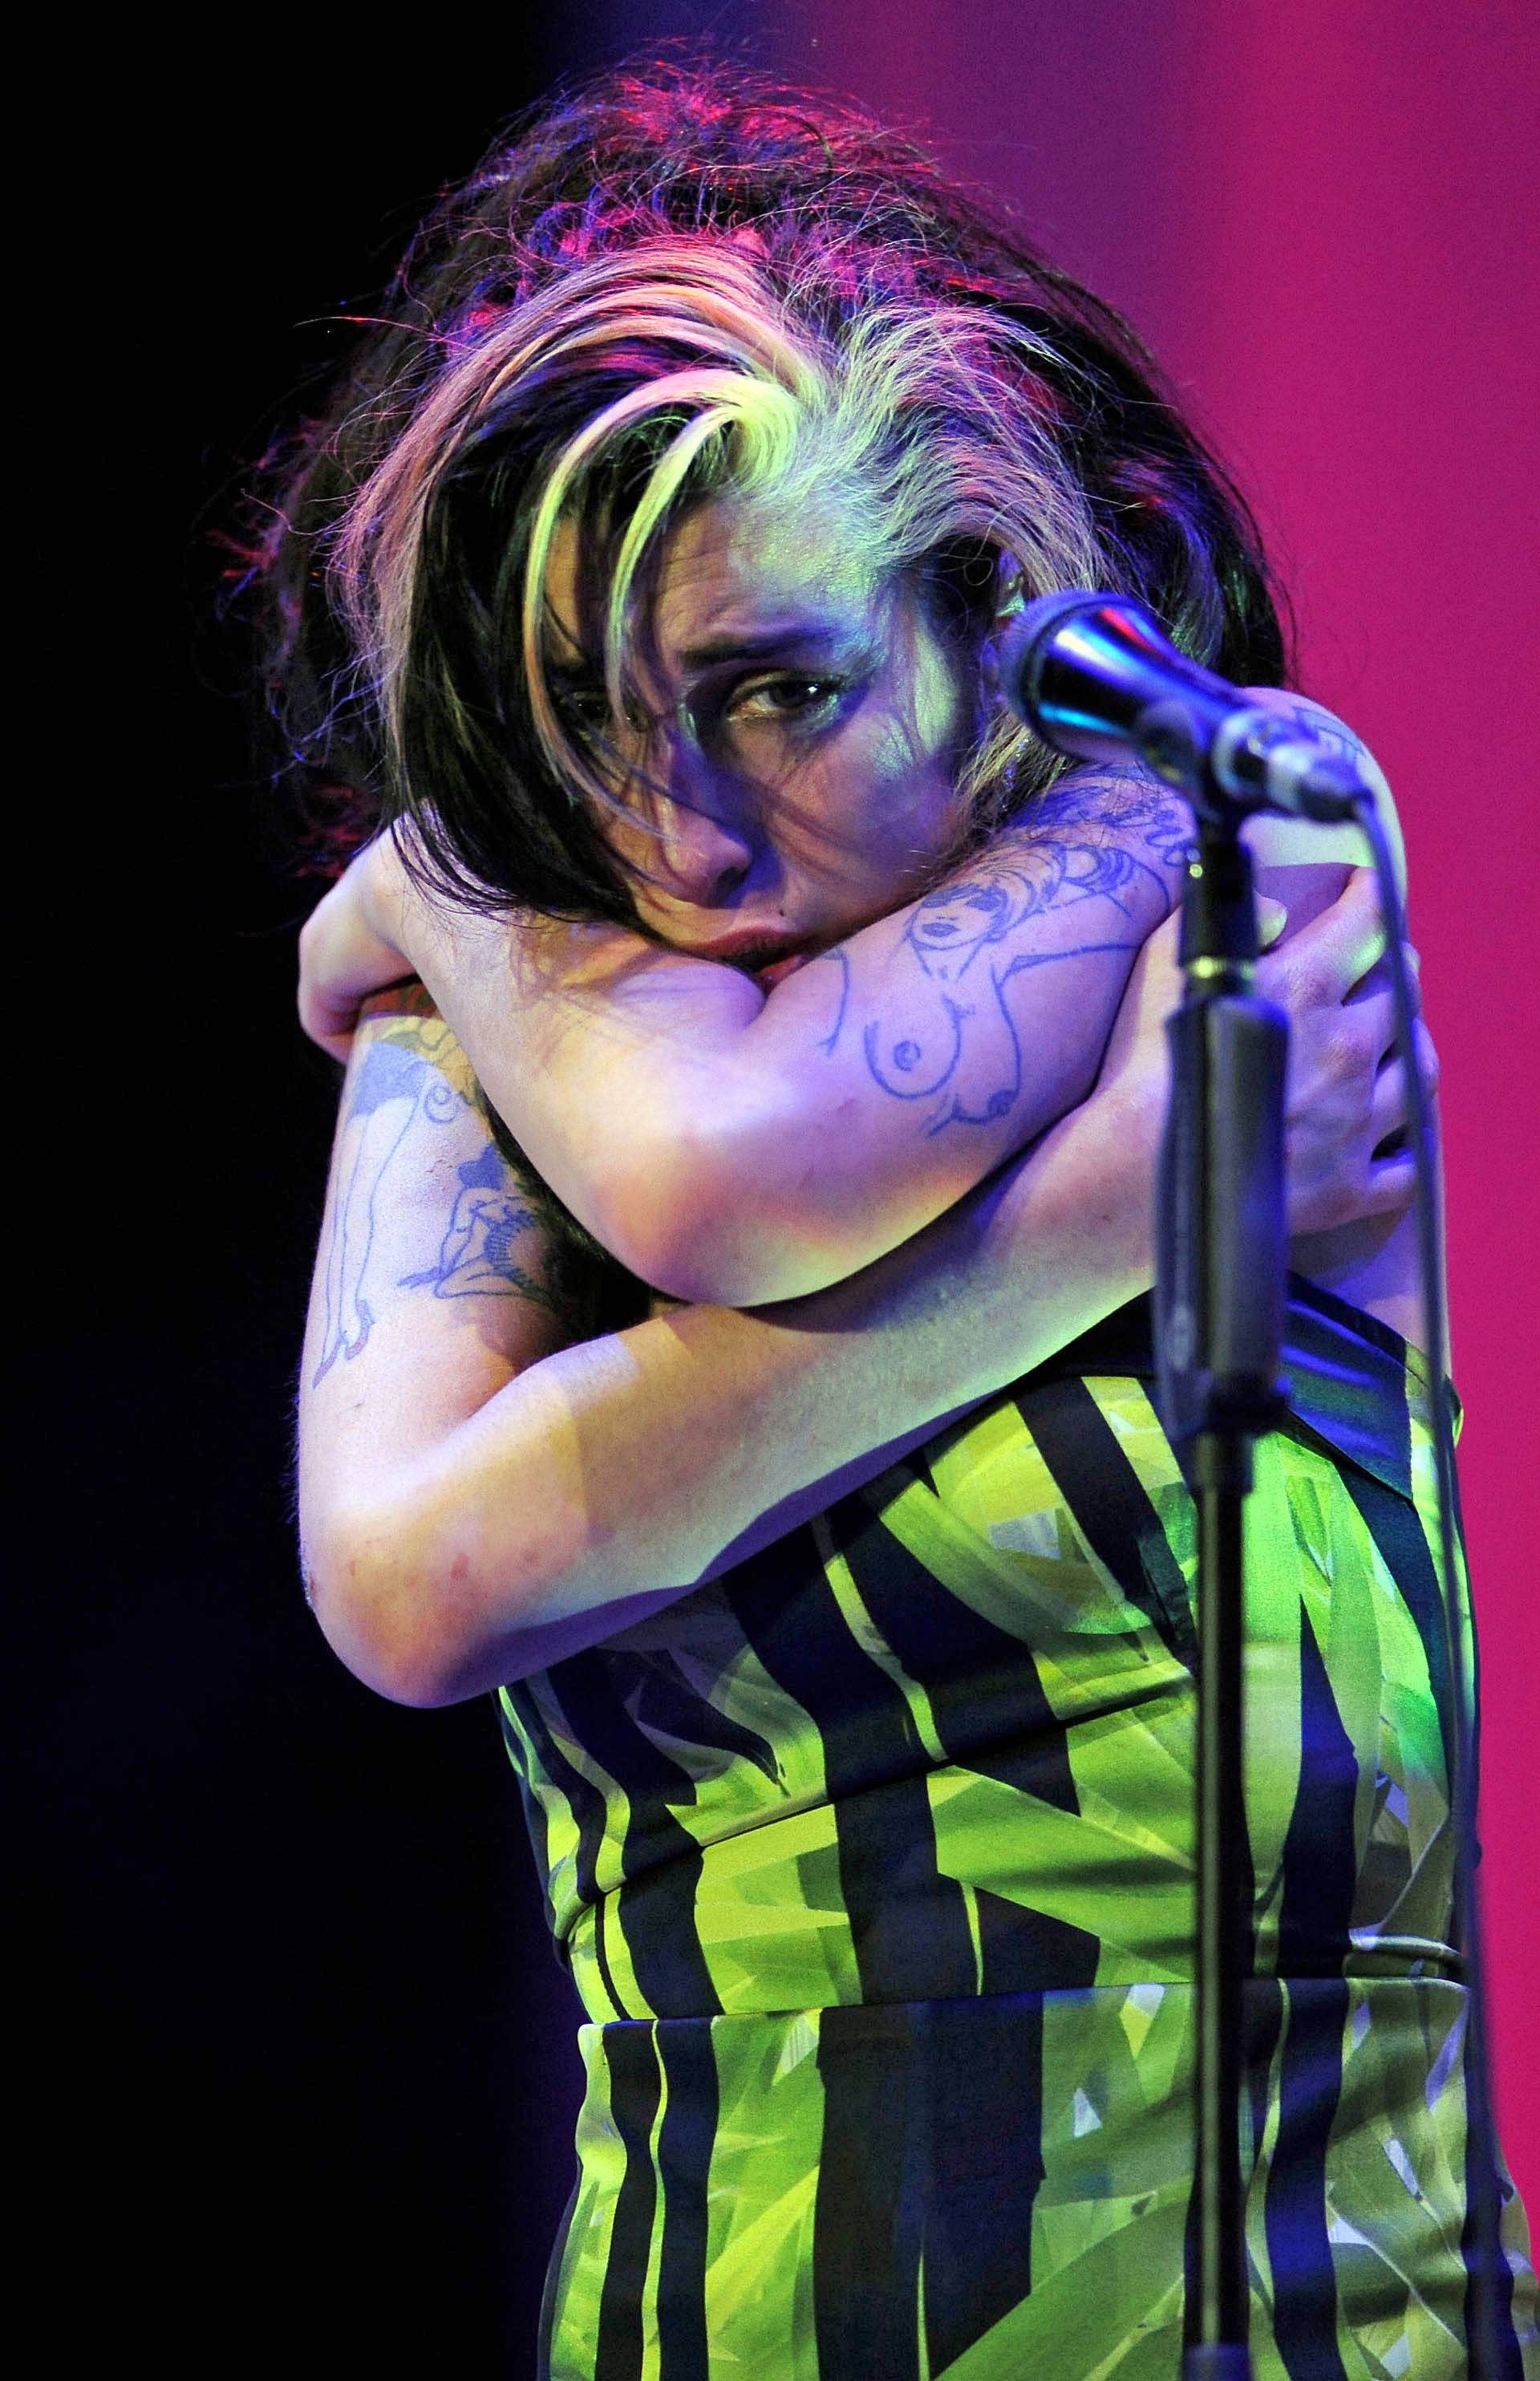 Amy Winehouse in Concert, Belgrade, Serbia - 18 Jun 2011